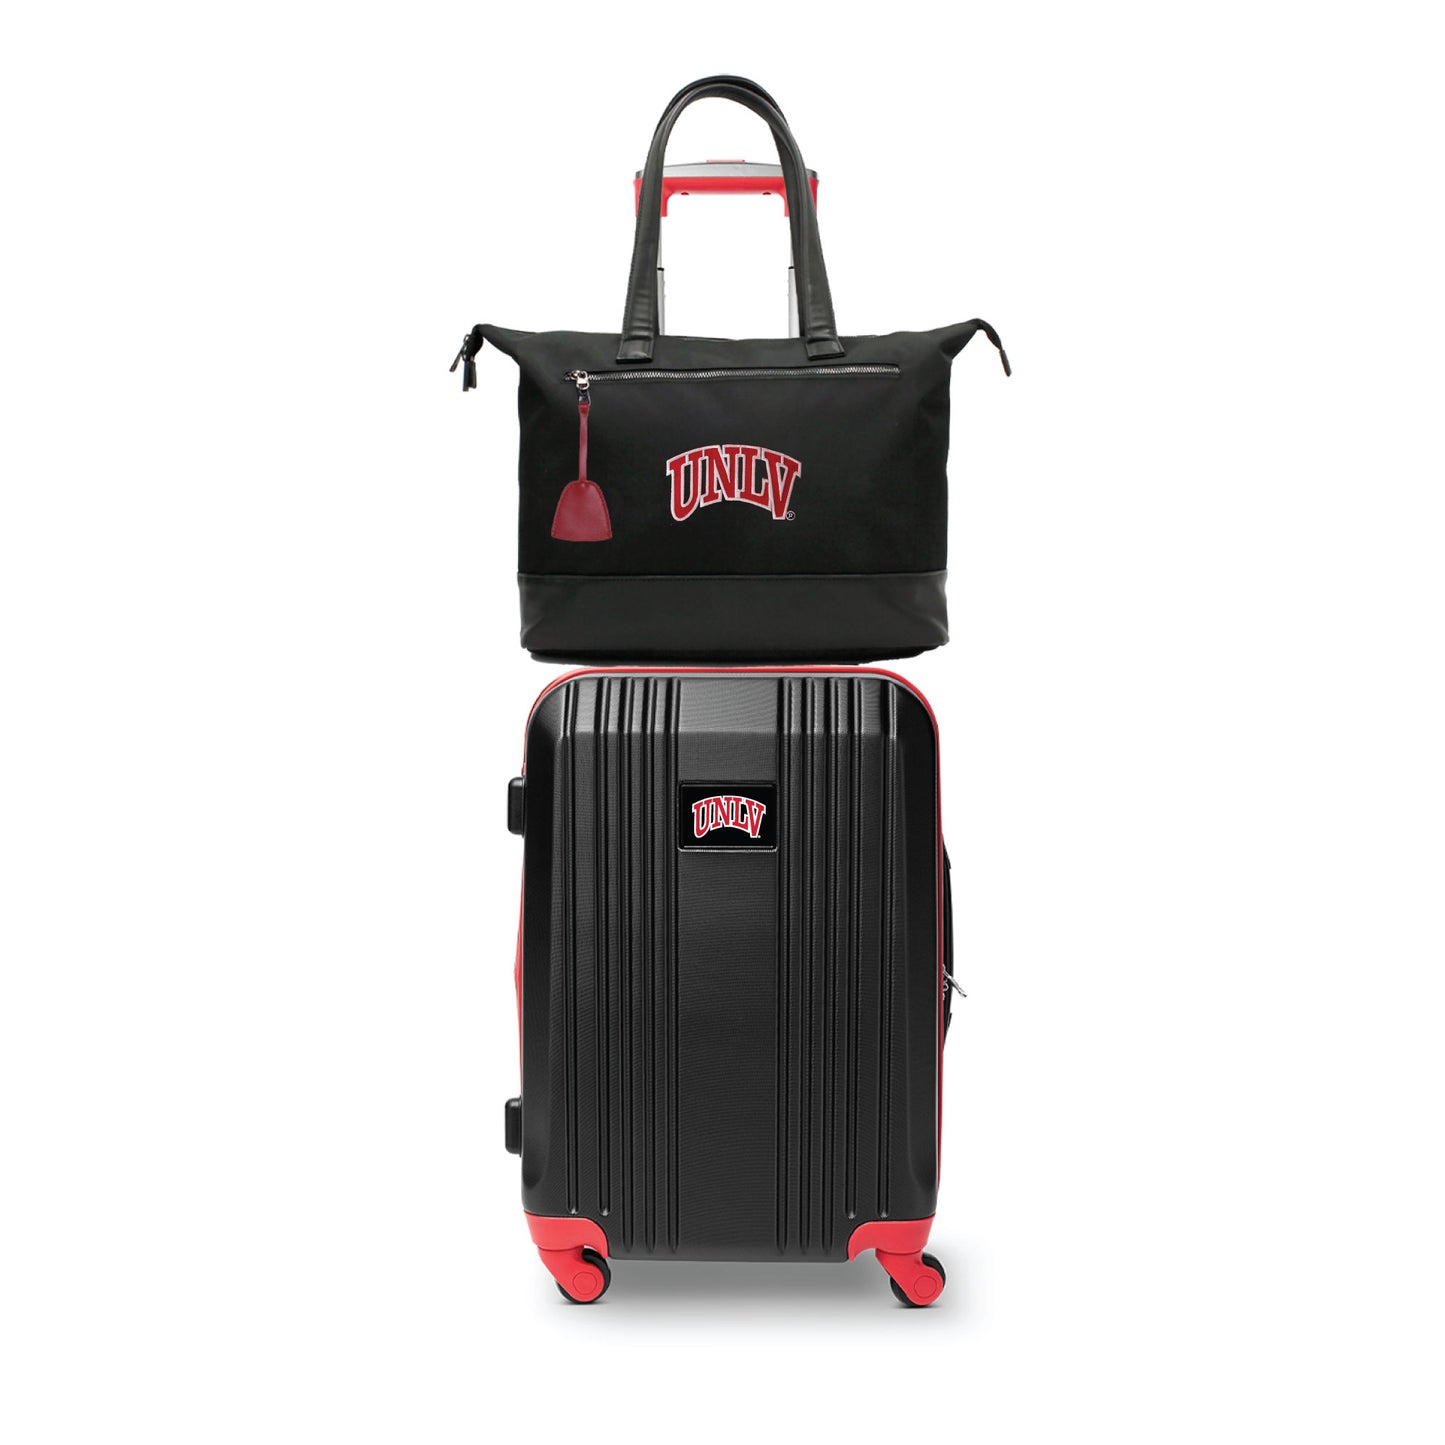 UNLV Rebels Premium Laptop Tote Bag and Luggage Set